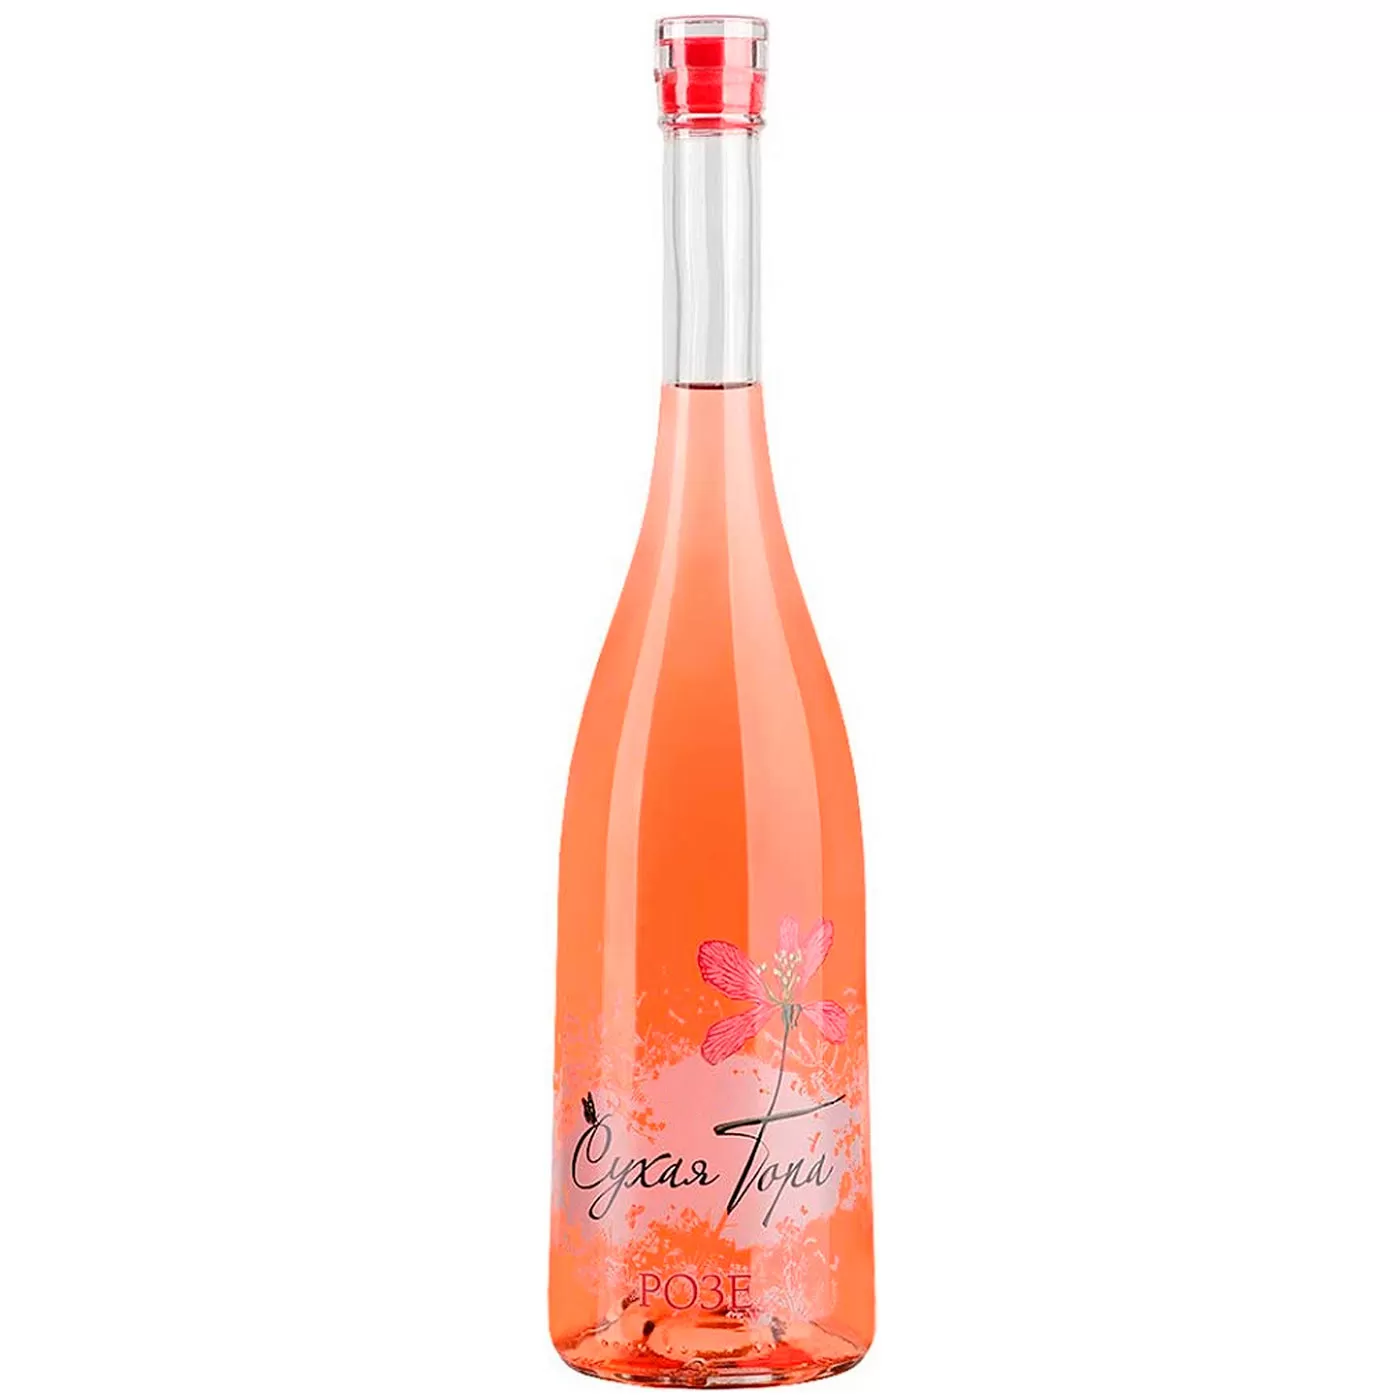 Каберне розовое сухое. Вино Solano Bobal Rose 0.75 розовое сухое. Вино Аристов Розе российское розовое сухое 0.75л. Вино Золотая балка розовое сухое. Вино сортовое розовое сухое Голд Розе.